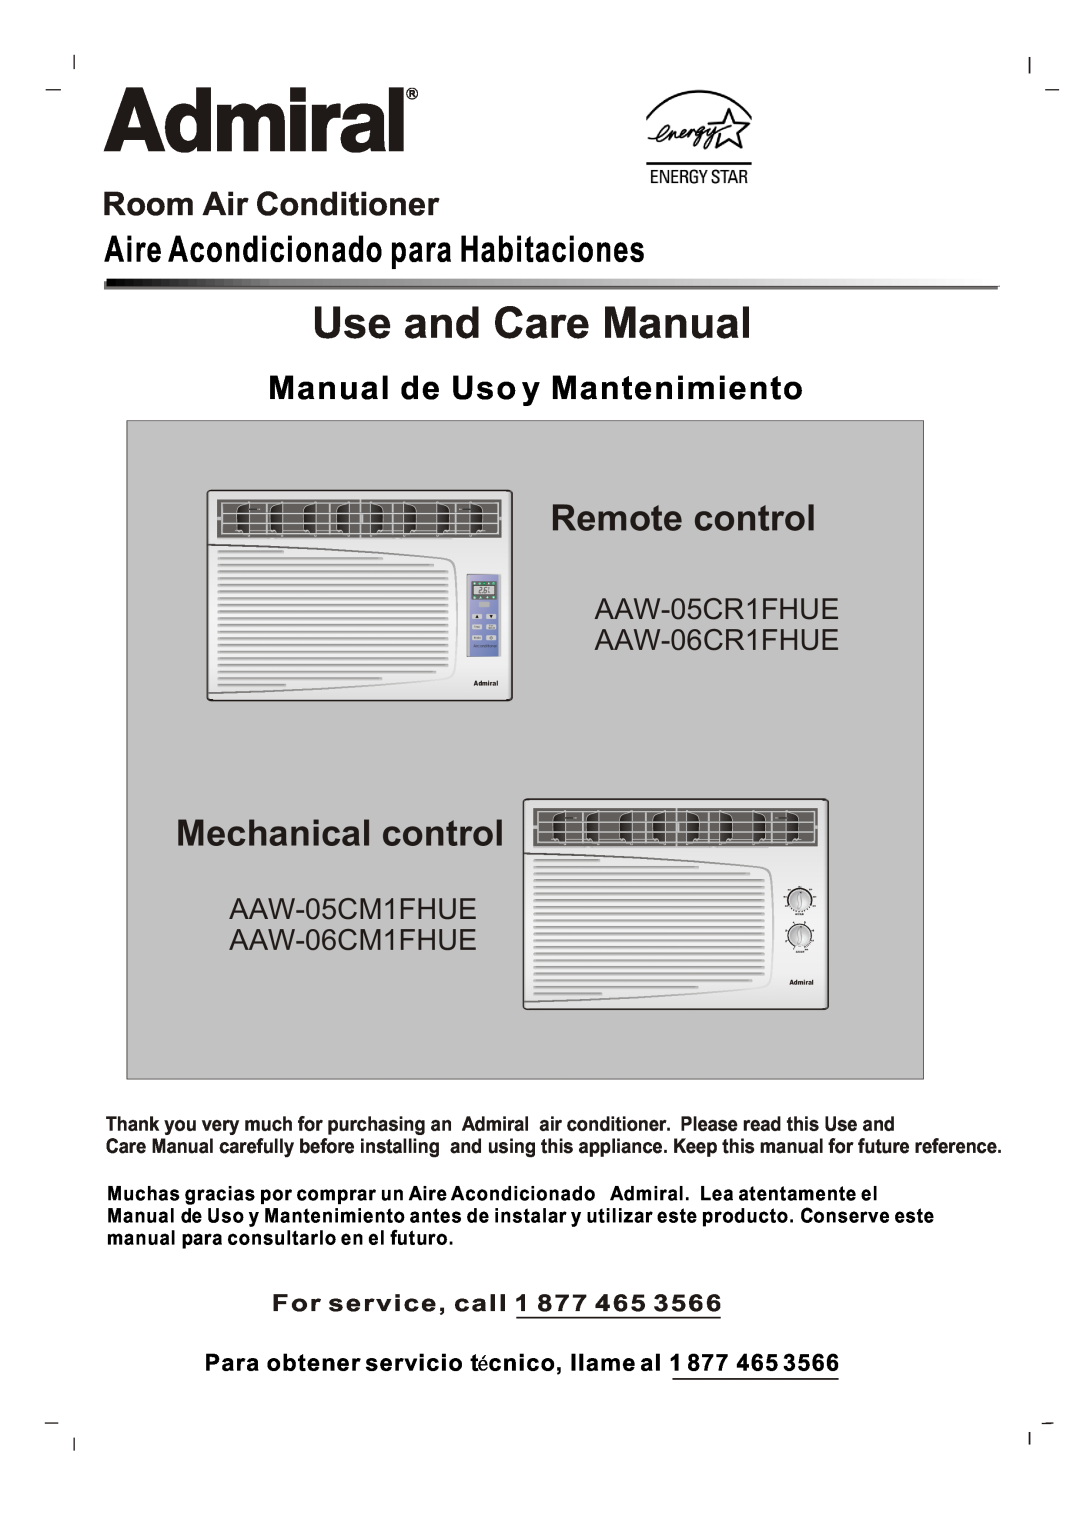 Admiral AAW-05CR1FHUE manual Para obtener servicio tcnico, llame al, Use and Care Manual, Remote control, AAW-06CR1FHUE 